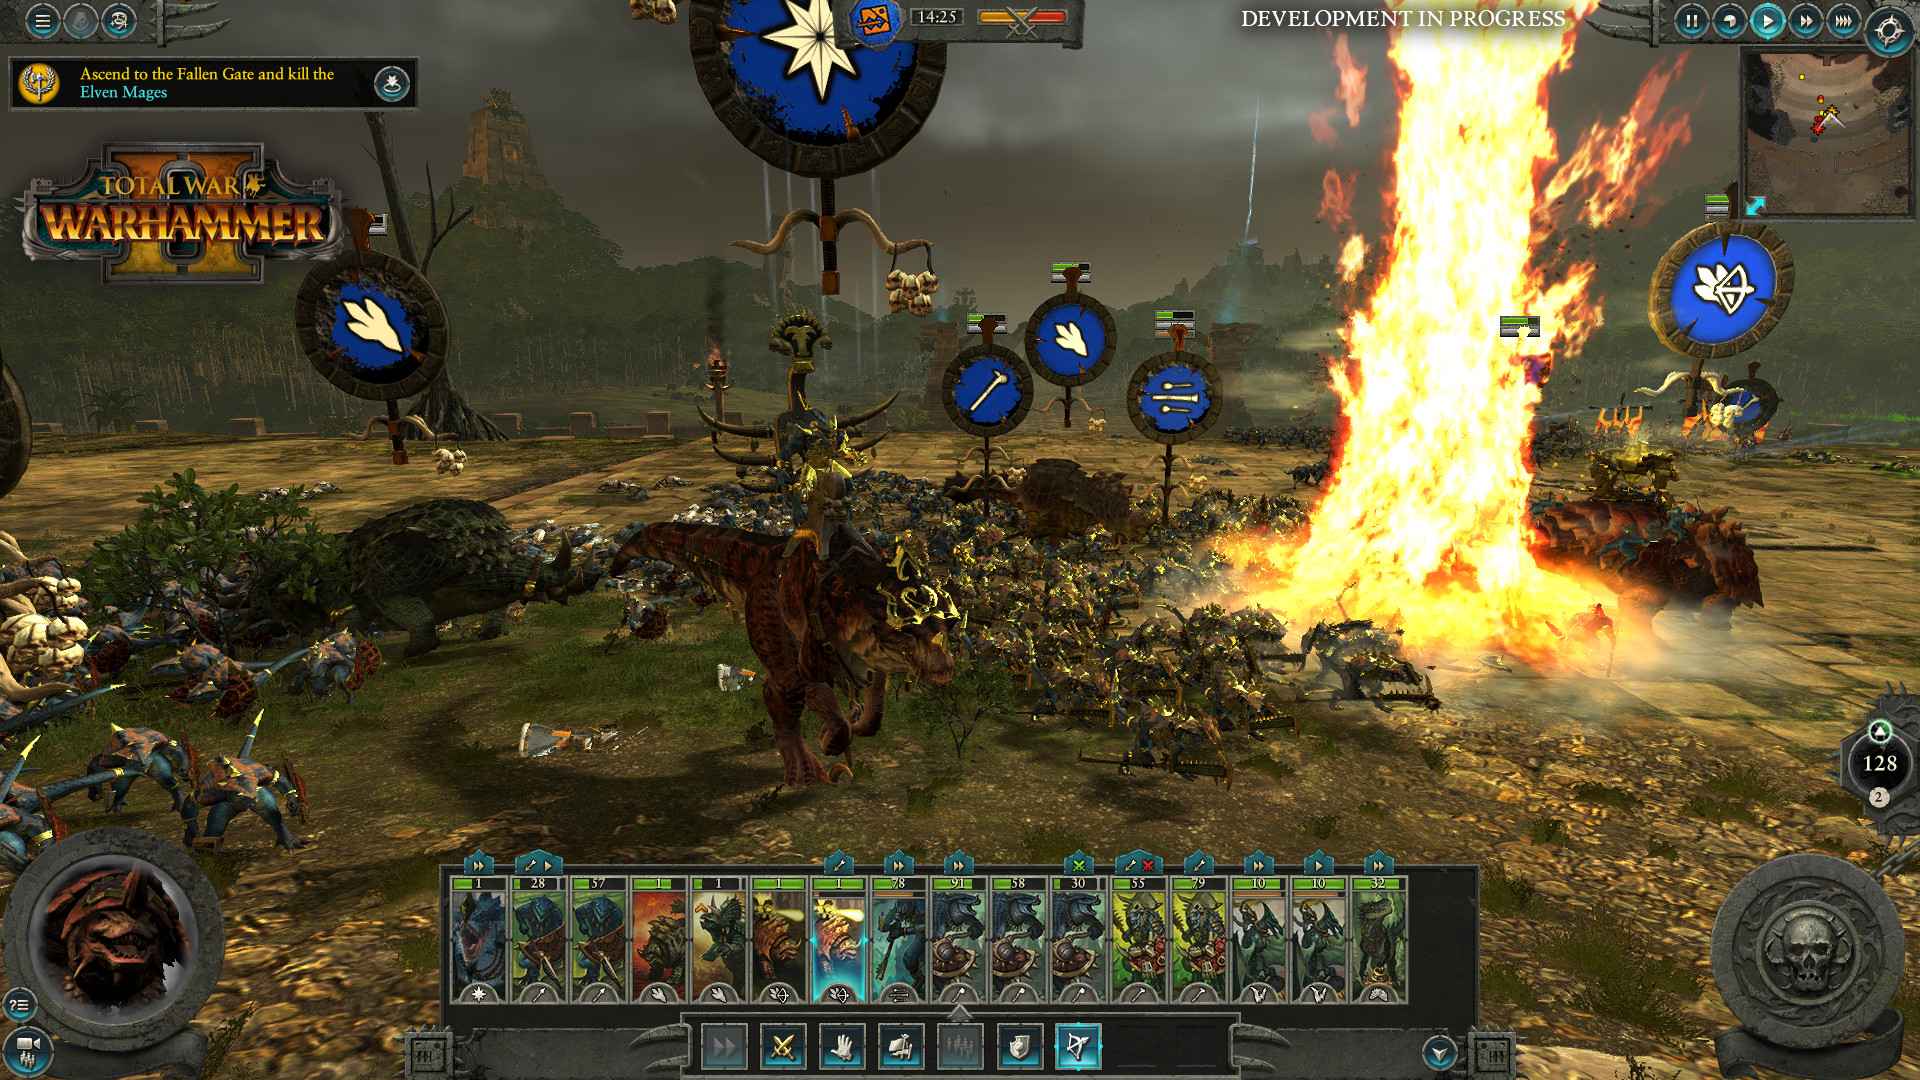 total war warhammer 2 multiplayer campaign